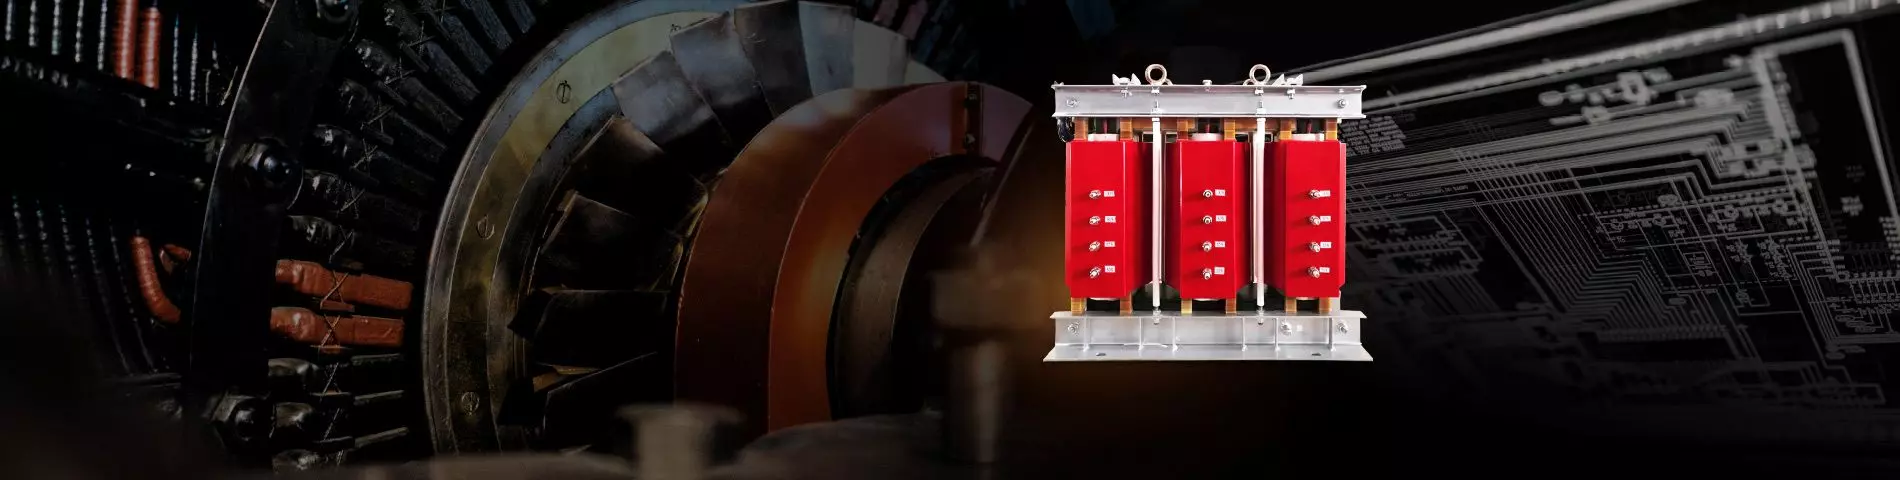 Arrancador de motor tipo seco MV Reactor de arranque de motor / Autotransformador de arranque de motor (compensador)